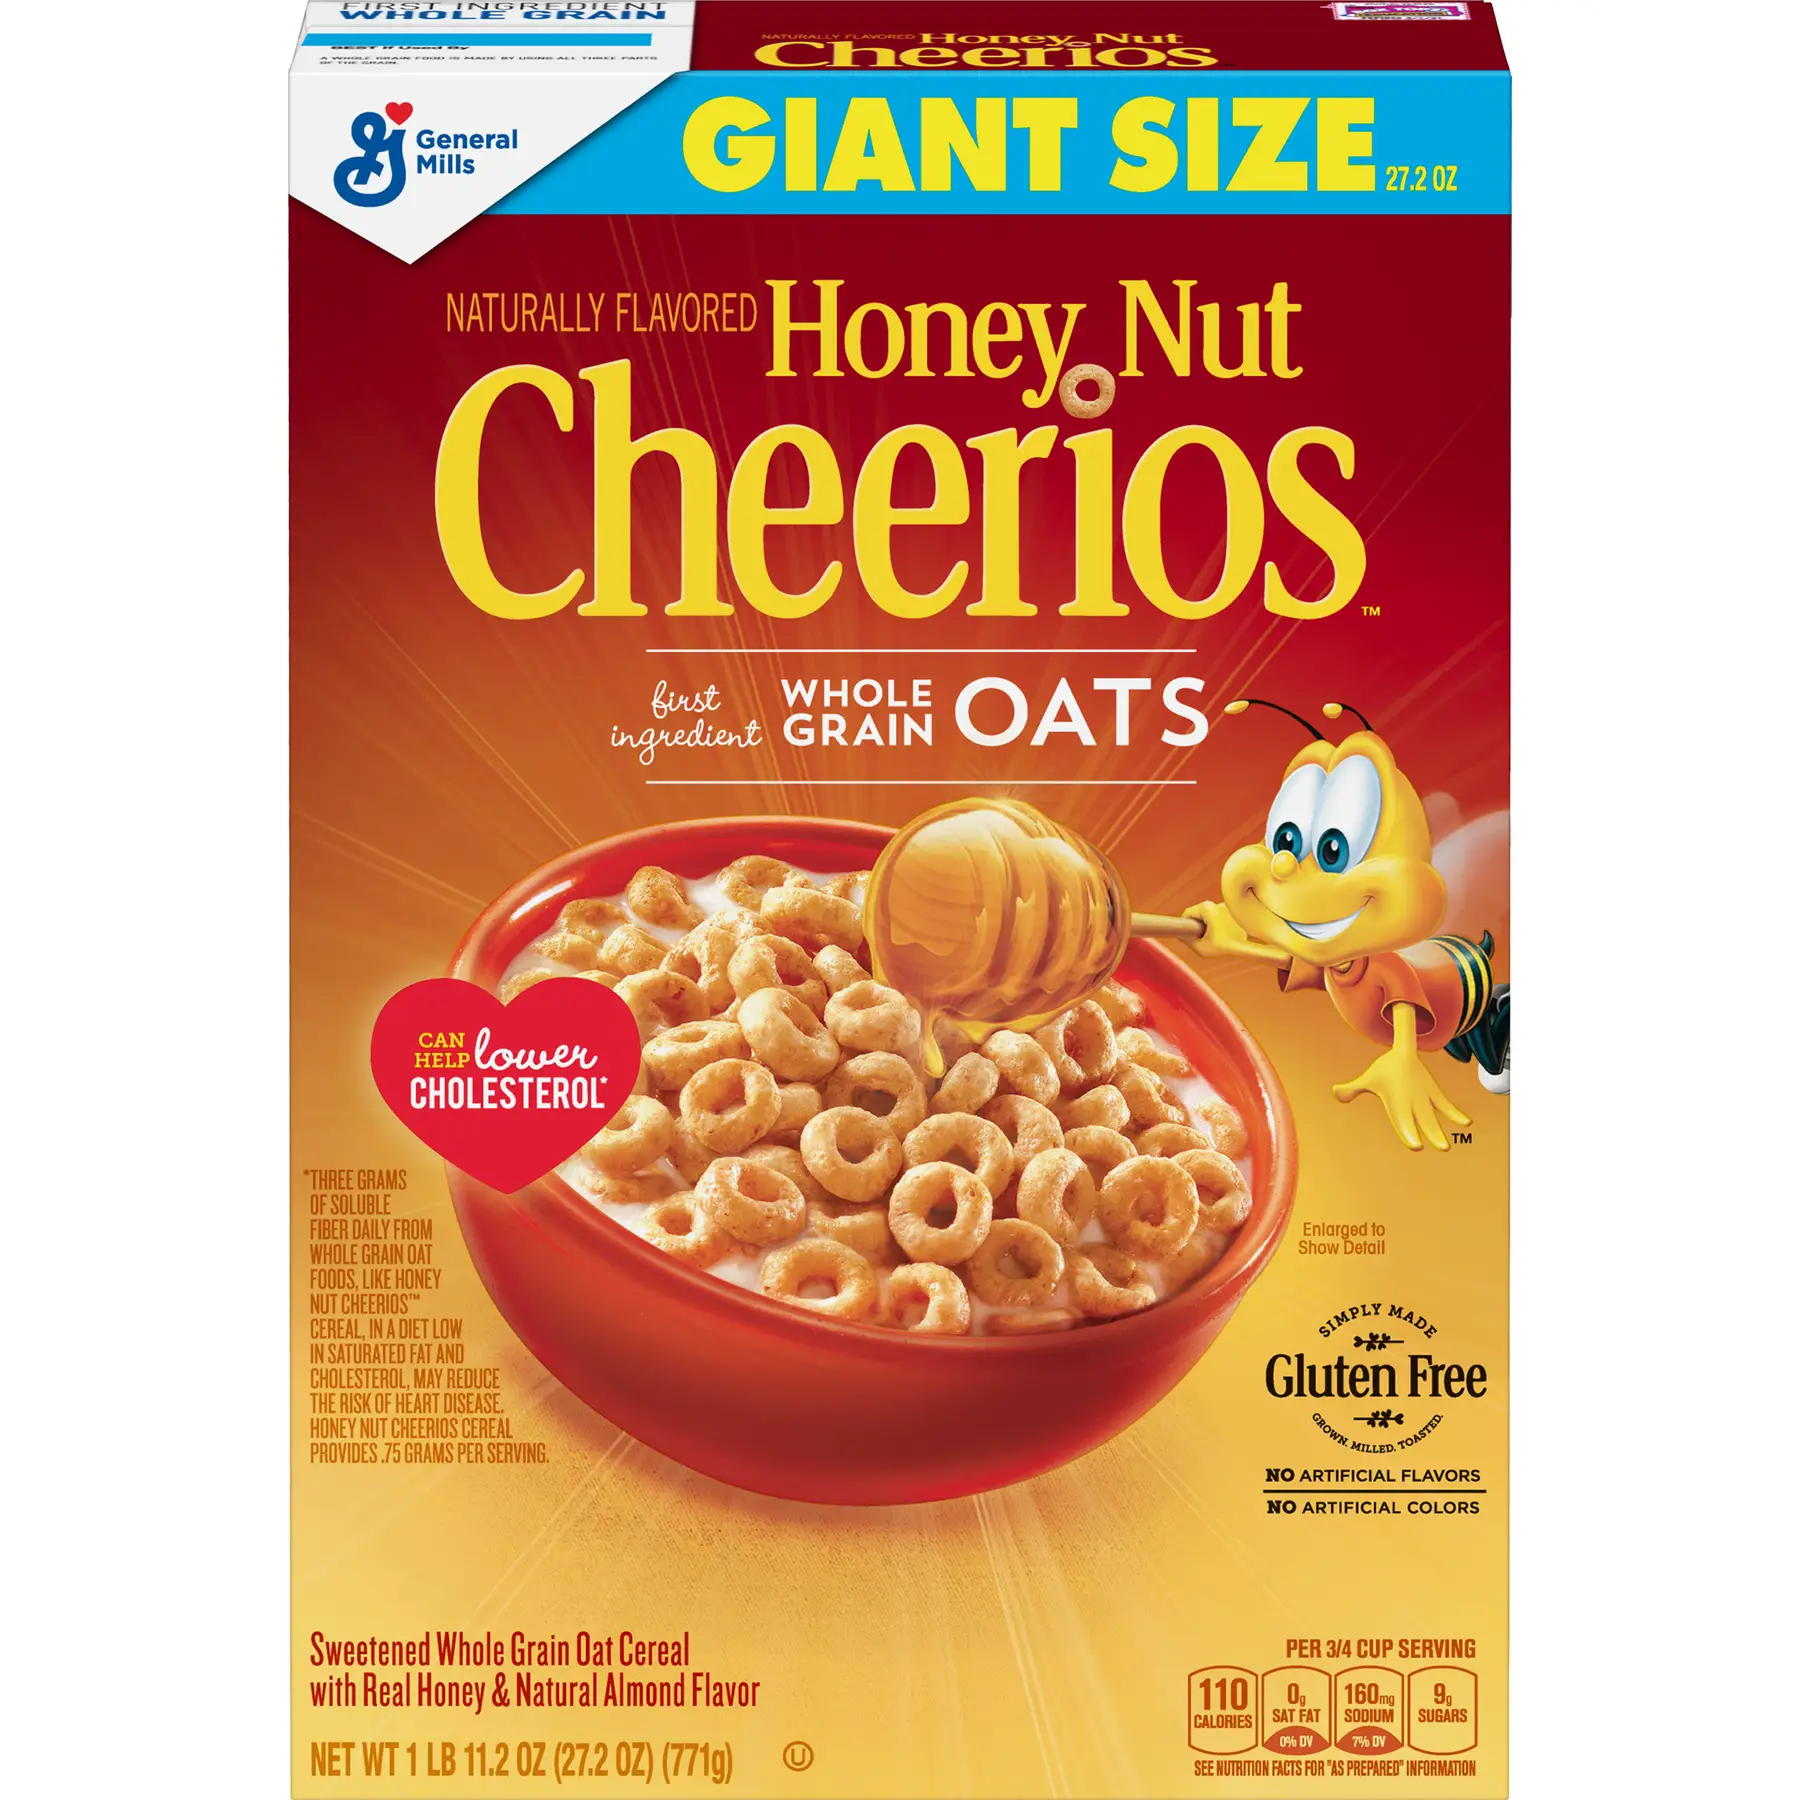 Honey Nut Cheerios Gluten Free Cereal, 27.2 oz Box